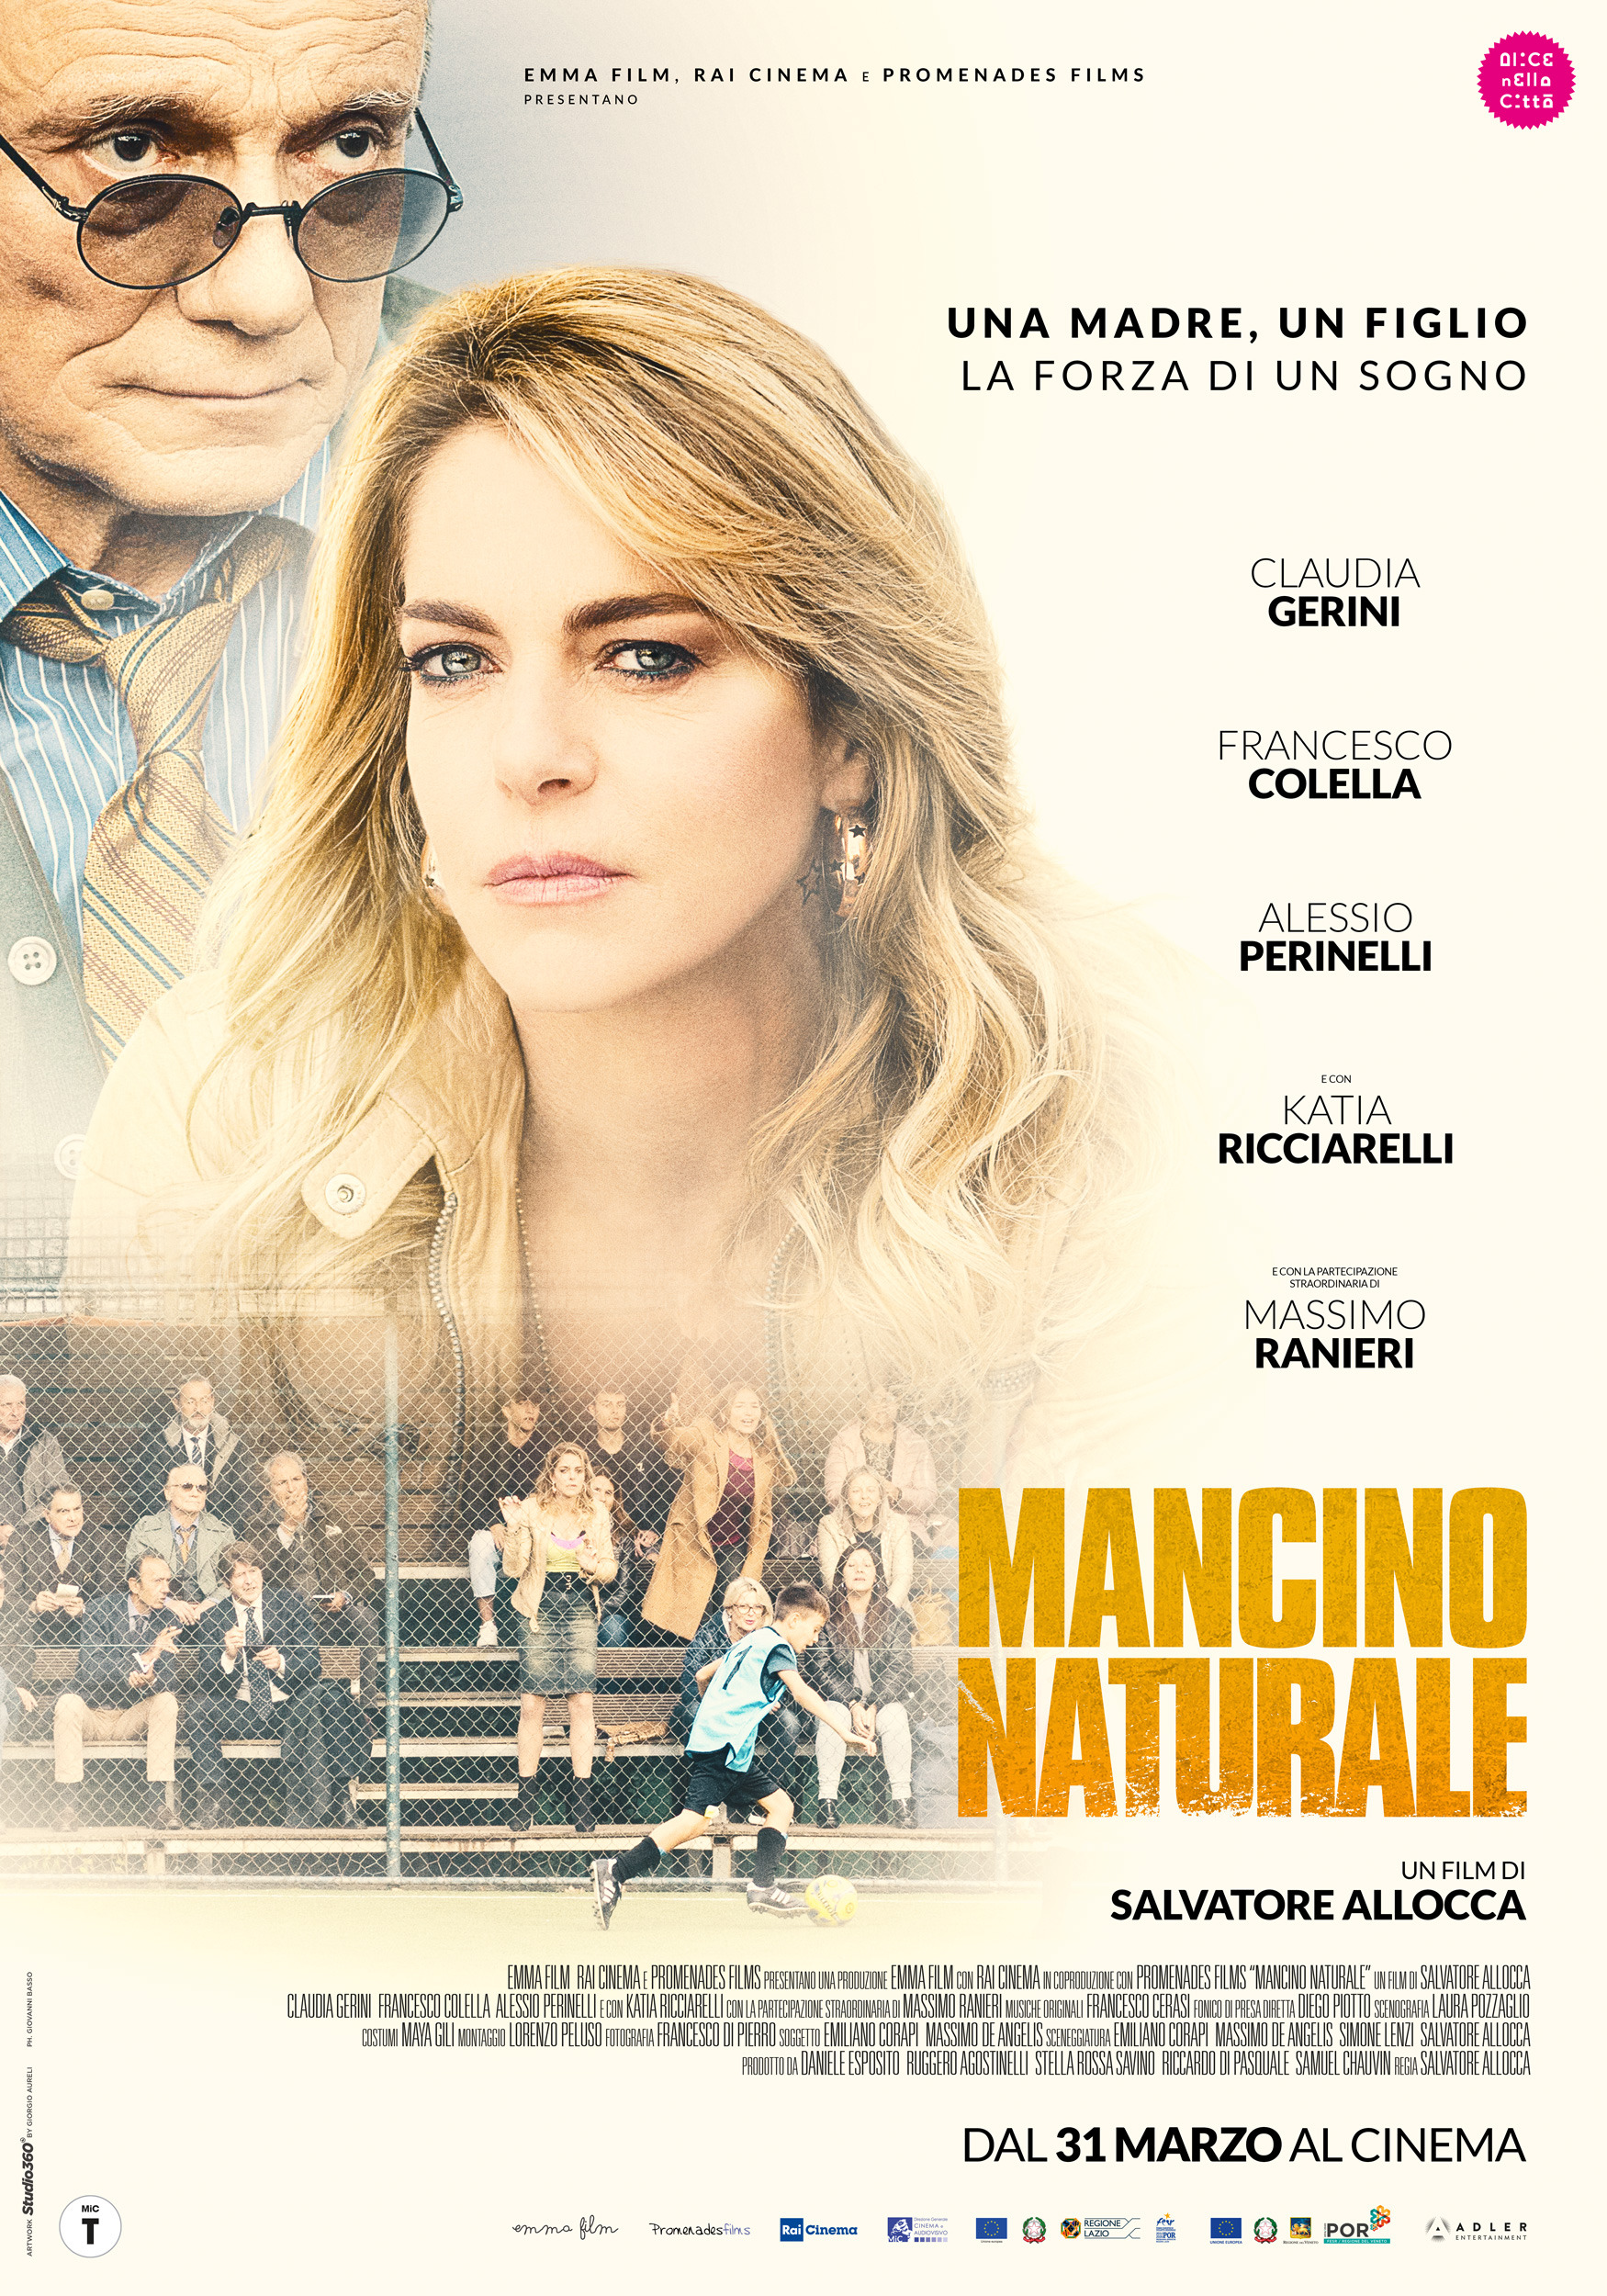 Mega Sized Movie Poster Image for Mancino naturale 